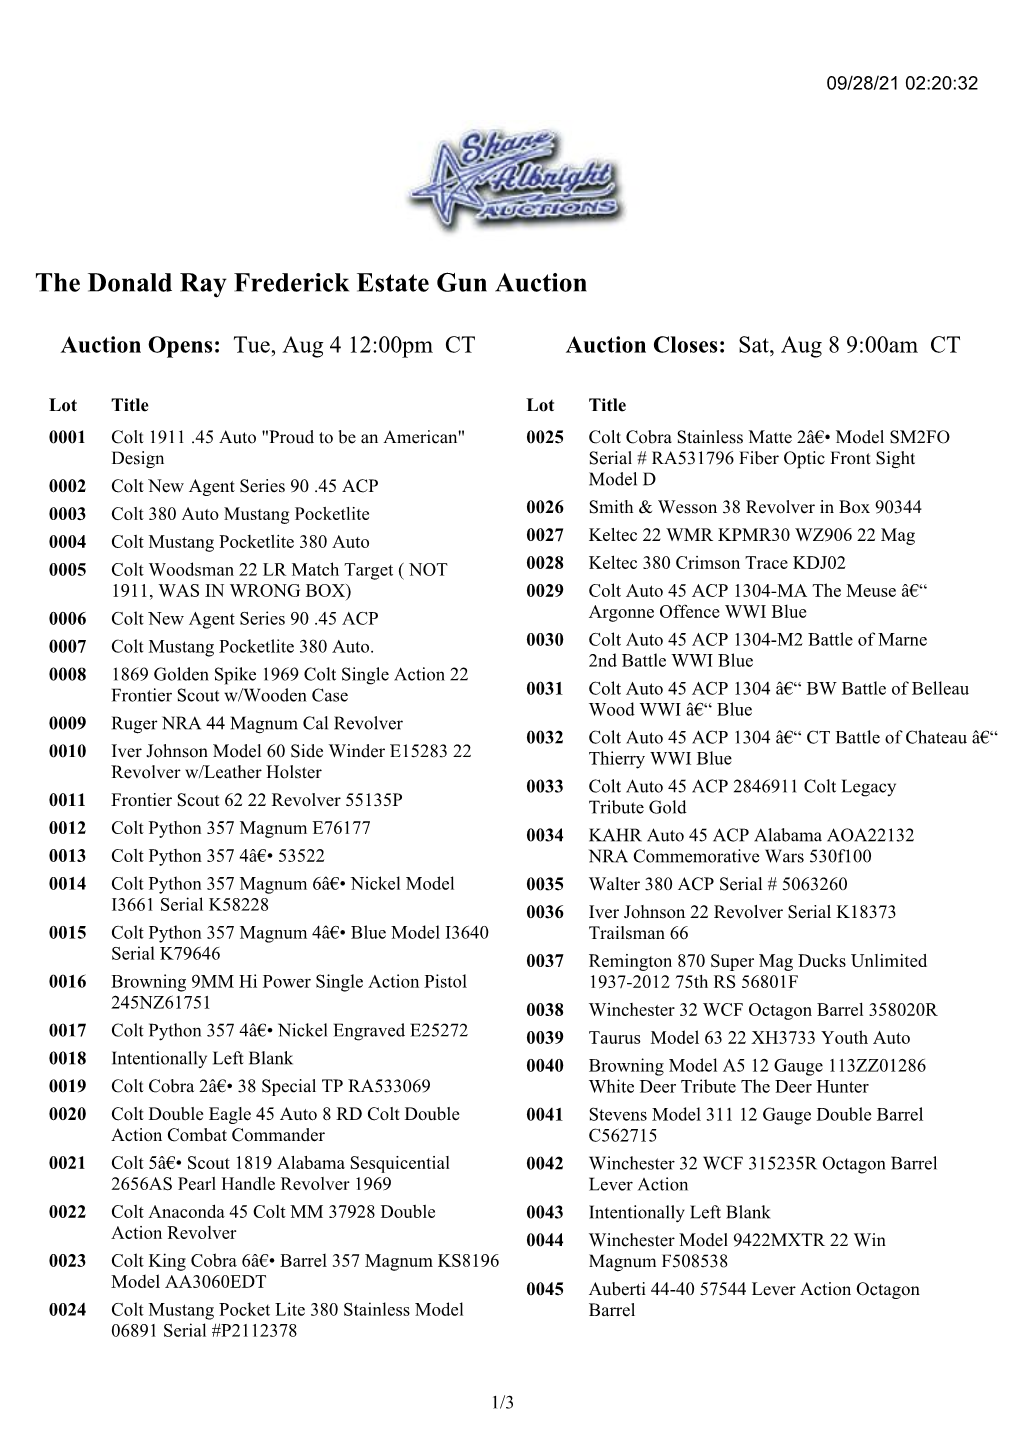 The Donald Ray Frederick Estate Gun Auction